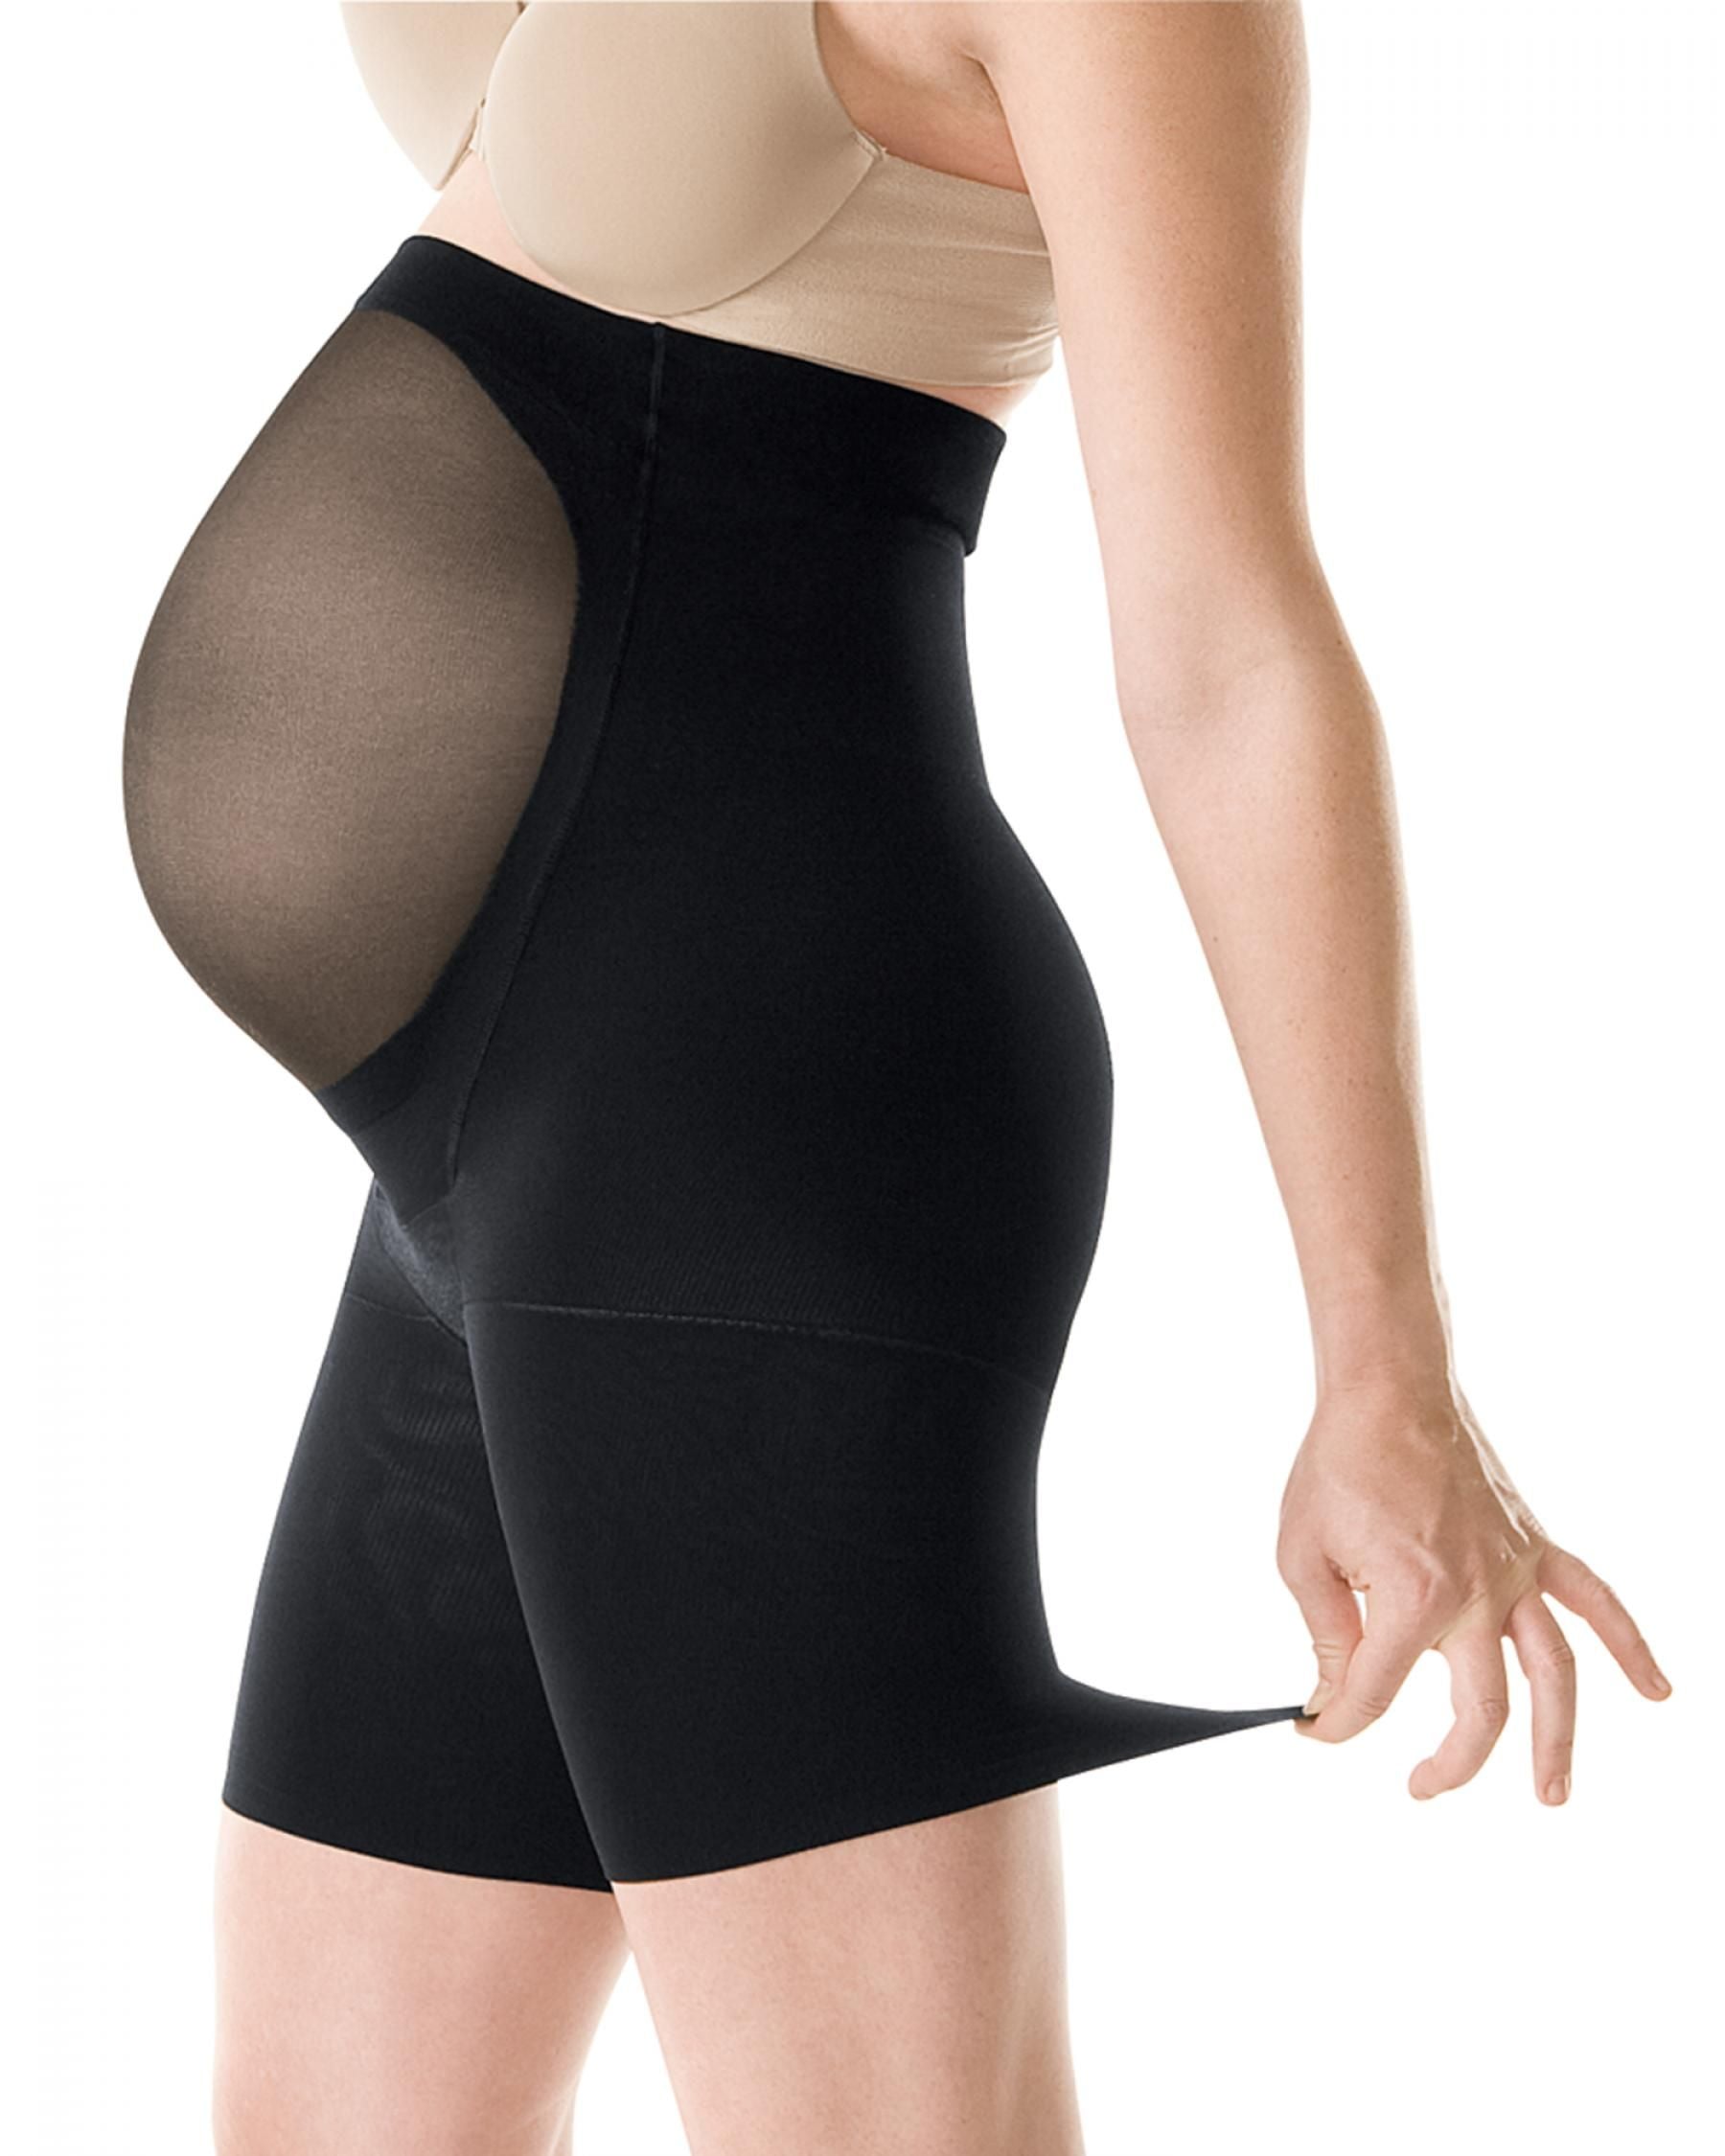 Cantaloop Maternity Postnatal Black Shaping Bodysuit - Size Maternity UK XL